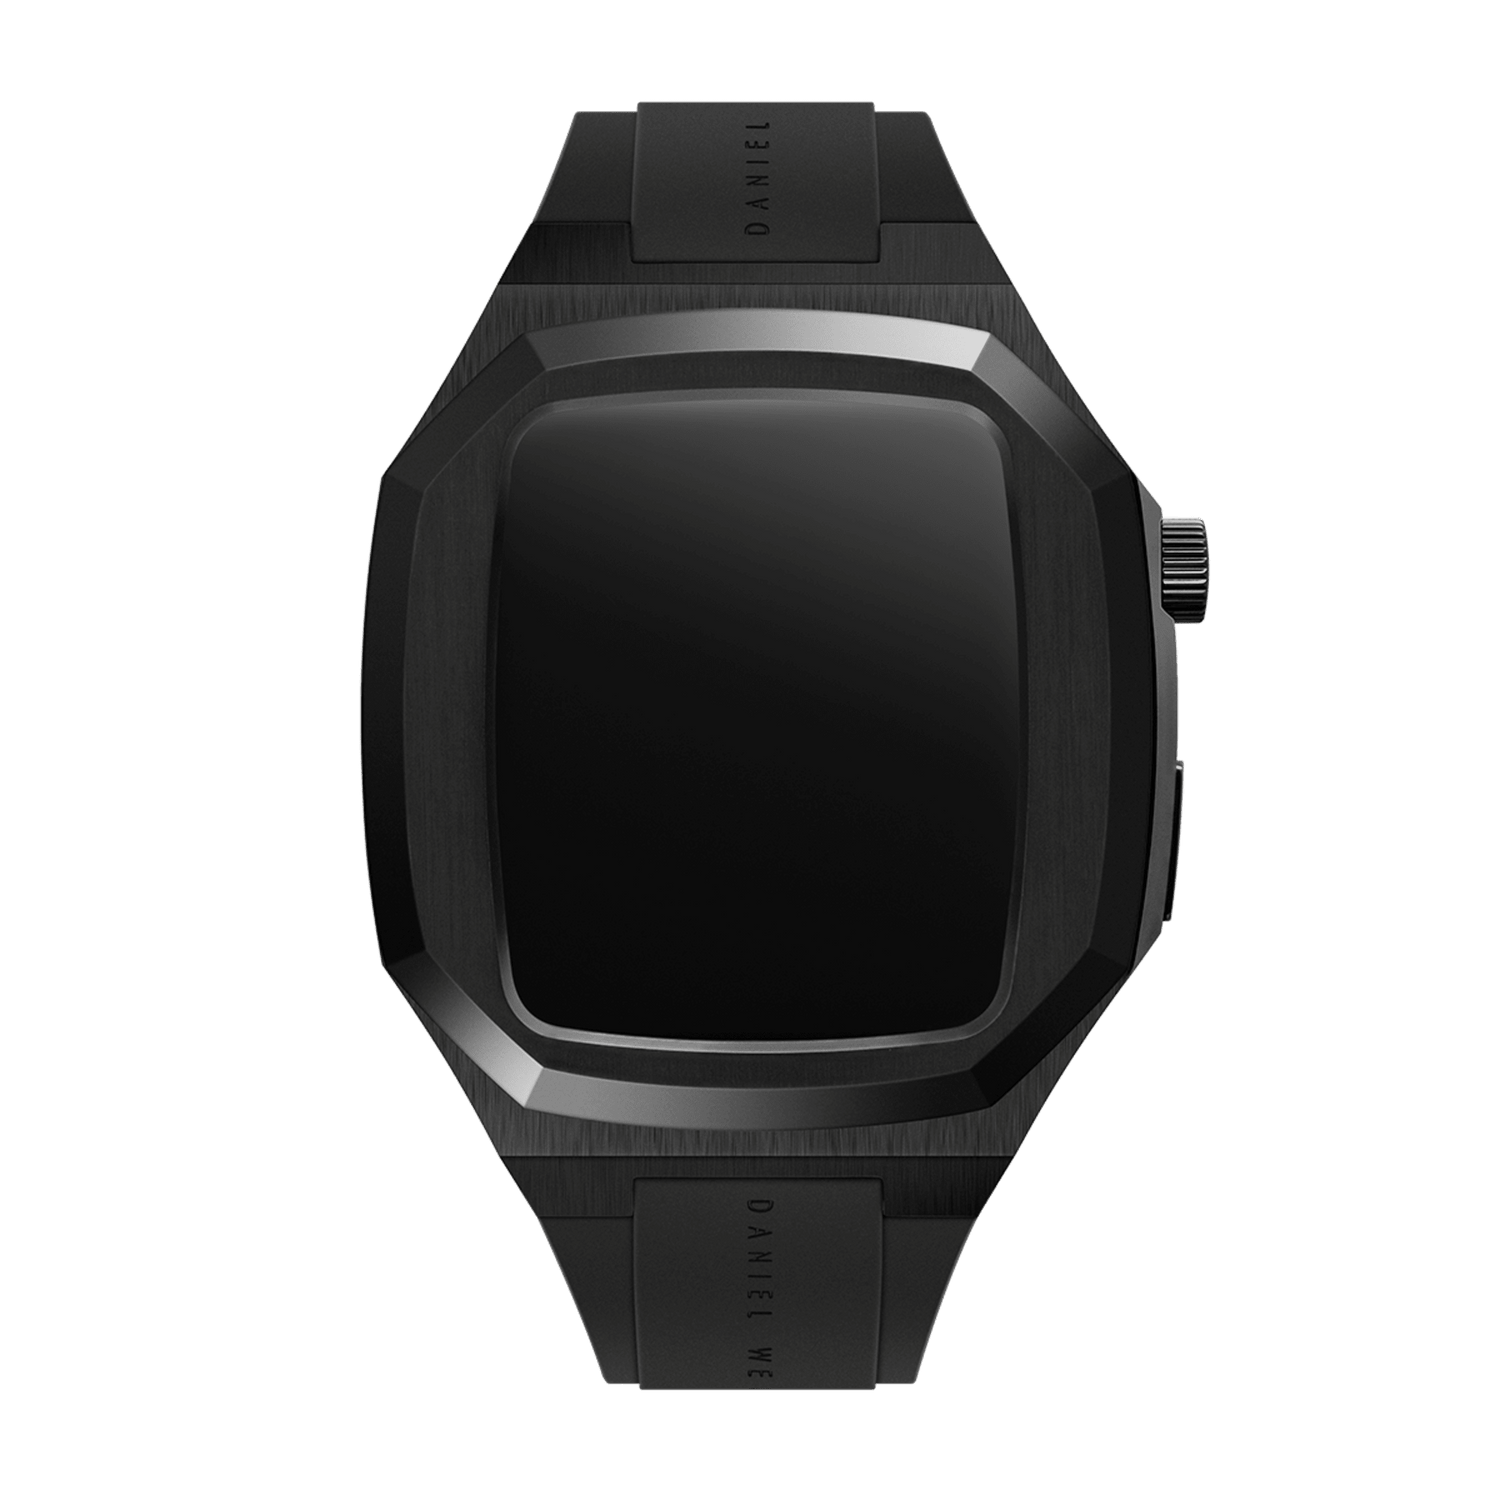 Smartwatch Case - Apple Watch Case Black - Size 40mm | DW